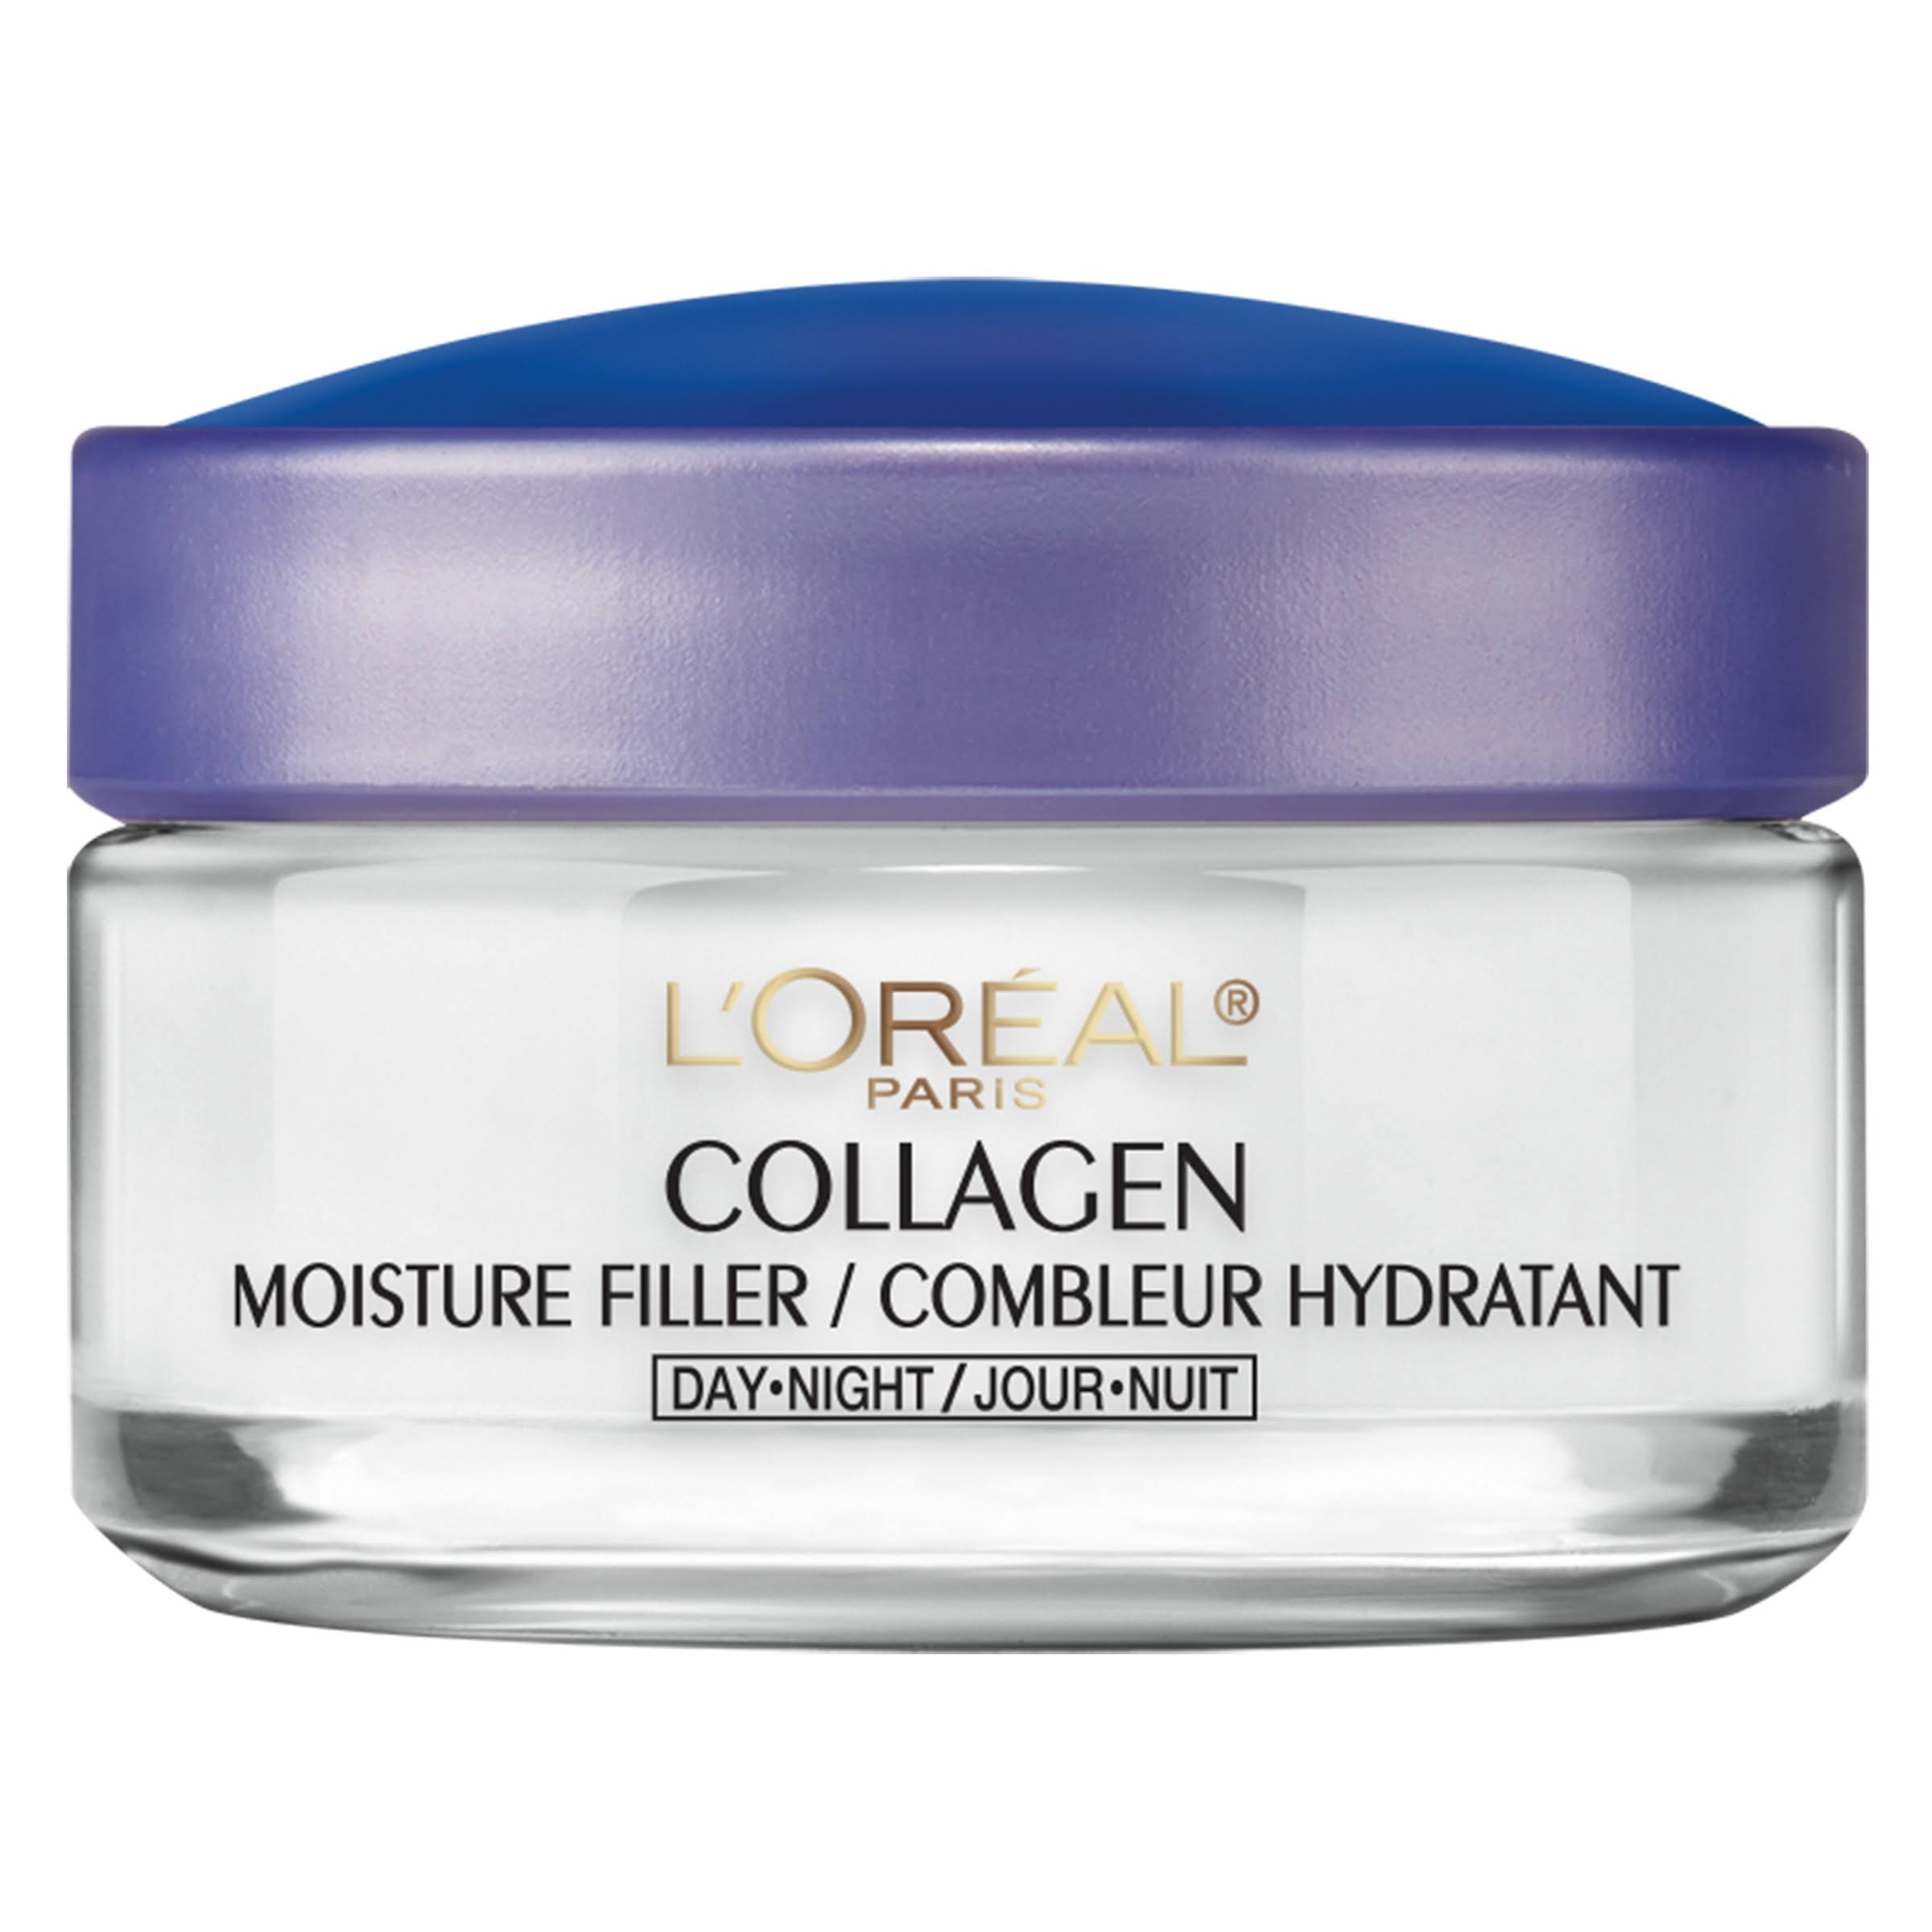 L'Oréal Paris Collagen Moisture Filler Day Night Cream - 1.7oz